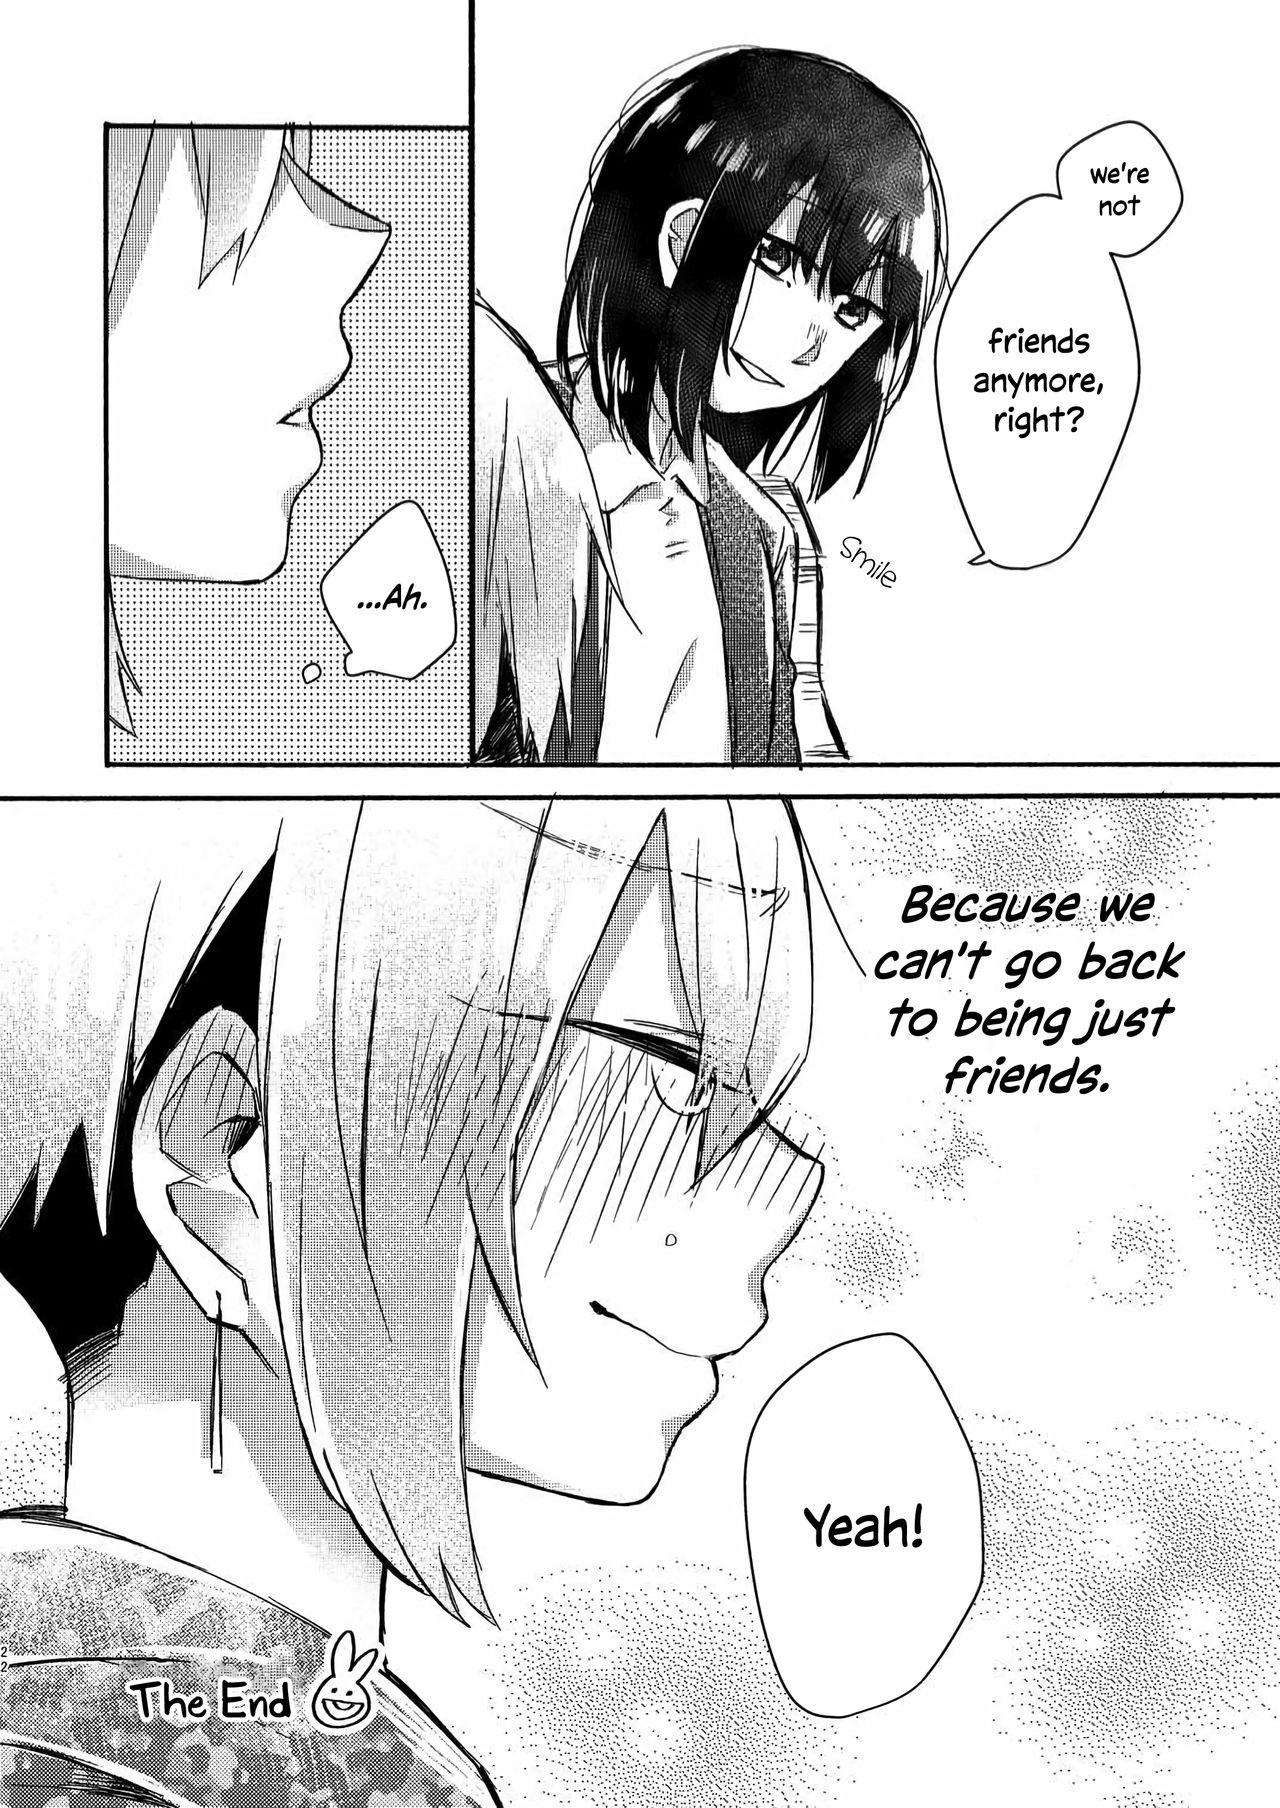 We can't go back to being friends | Tomodachi ni nante modorenai 29